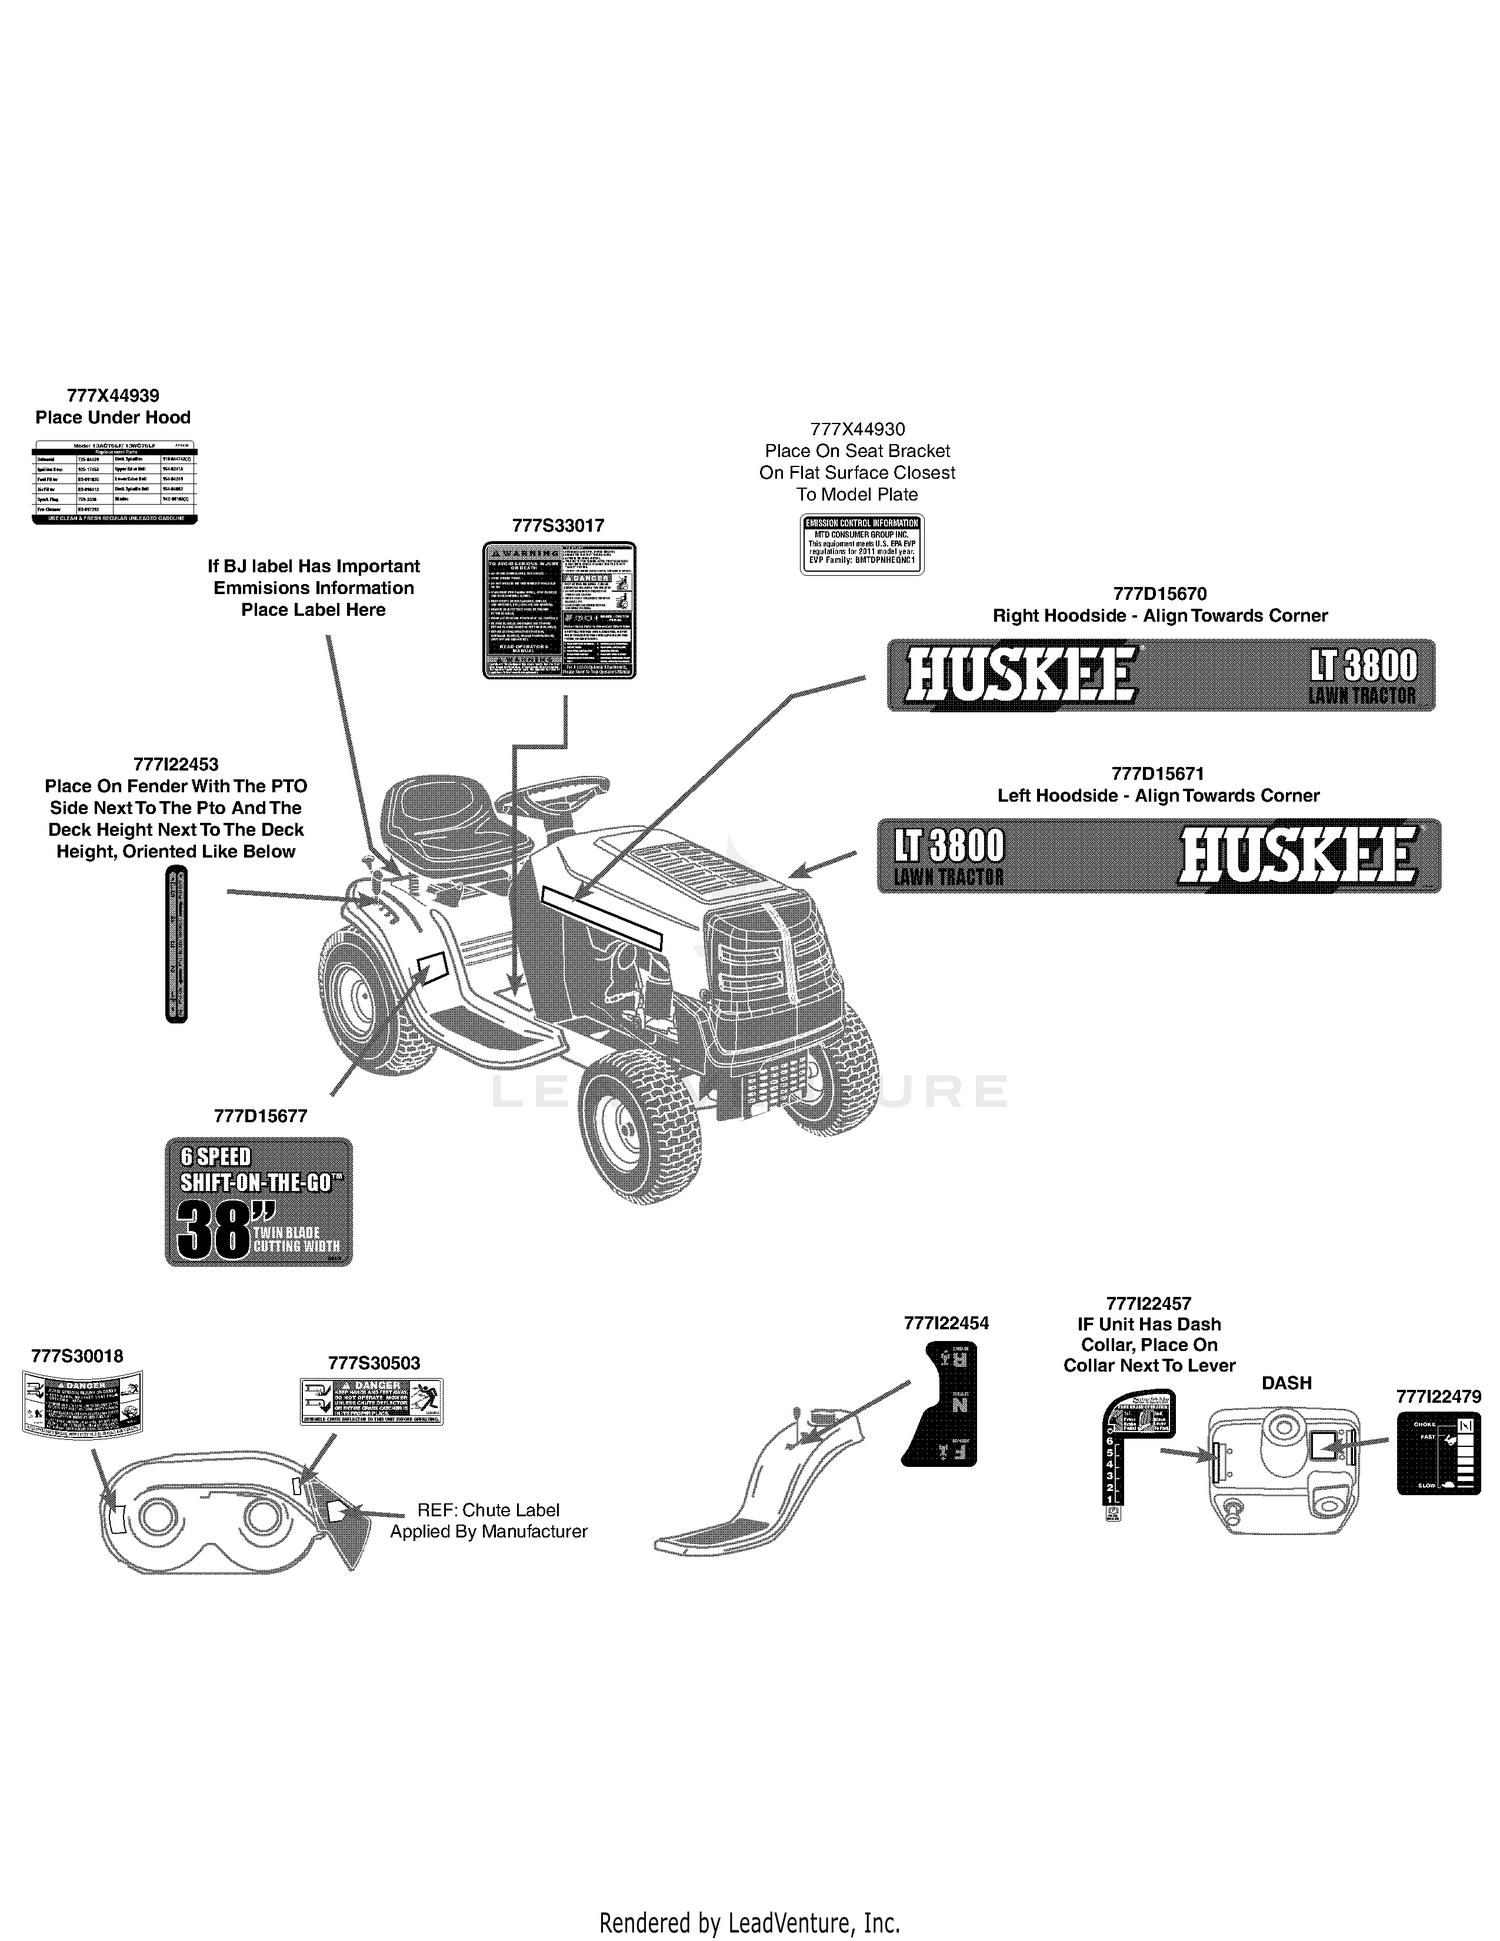 Huskee Lawn Mower Wiring Diagram Wiring Diagram